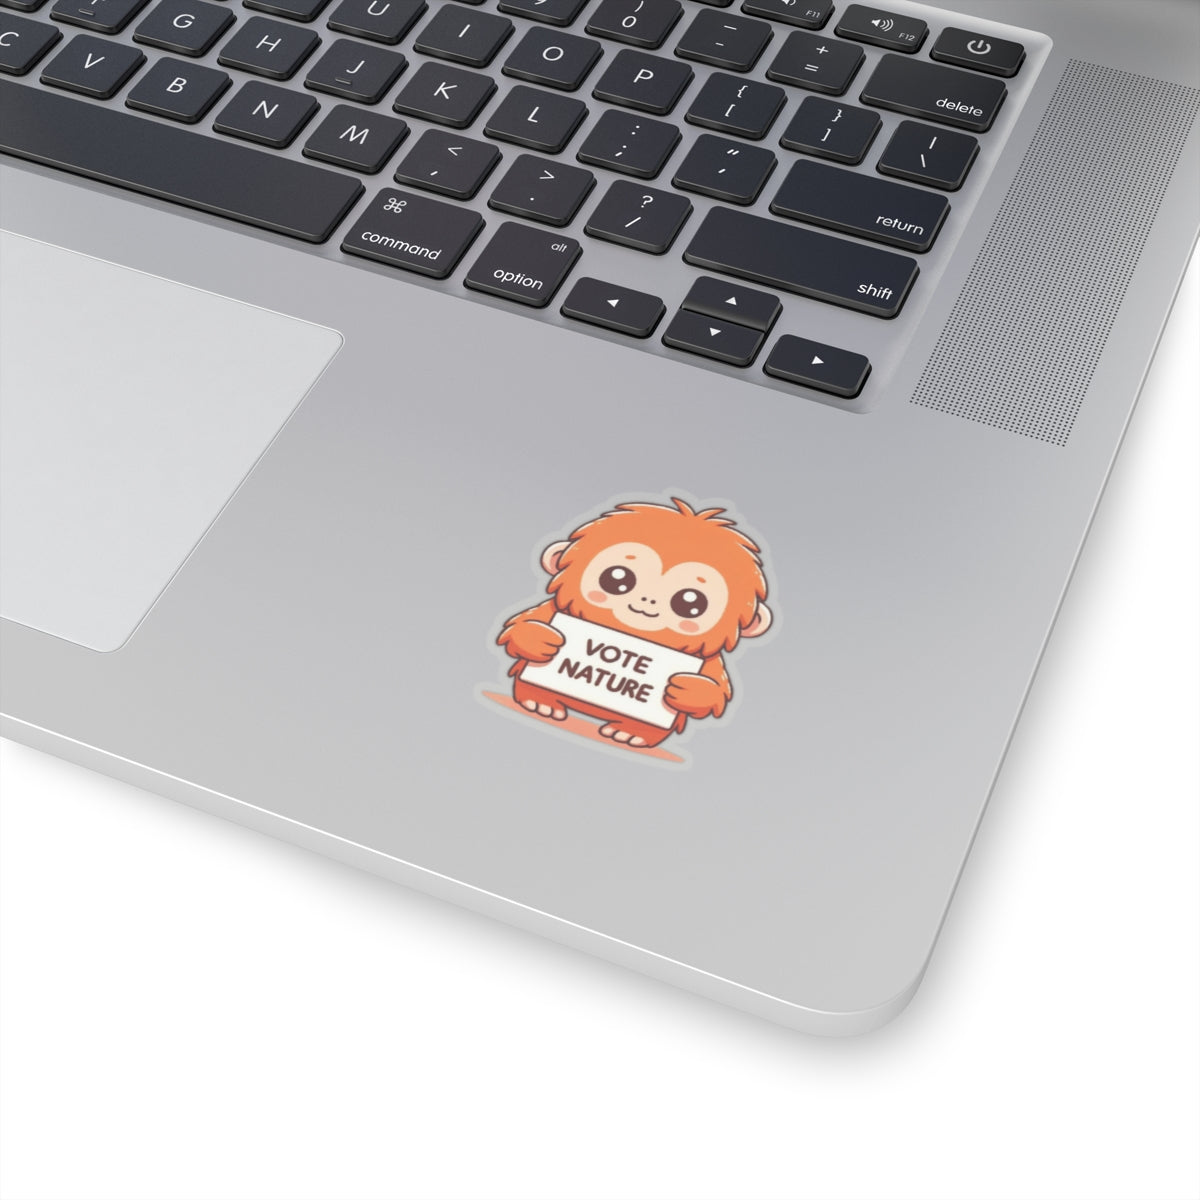 Inspirational Cute Orangutan Statement vinyl Sticker: Vote Nature! for laptop, kindle, phone, ipad, instrument case, notebook, mood board